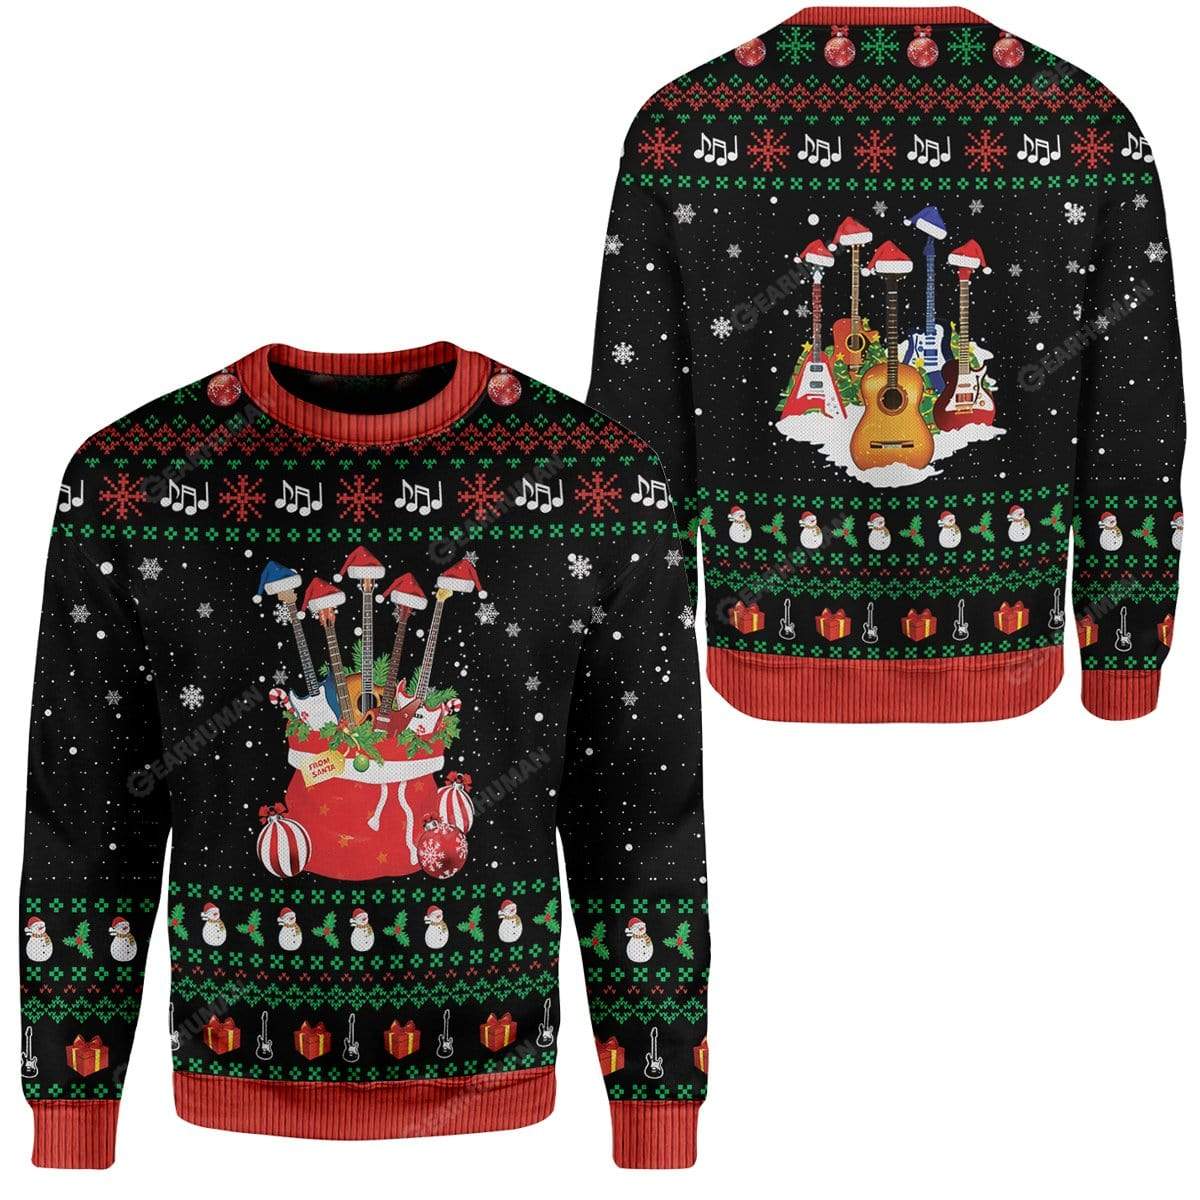 Ugly Christmas Guitars Santa Custom Sweater Apparel HD-DT25111910 Ugly Christmas Sweater 